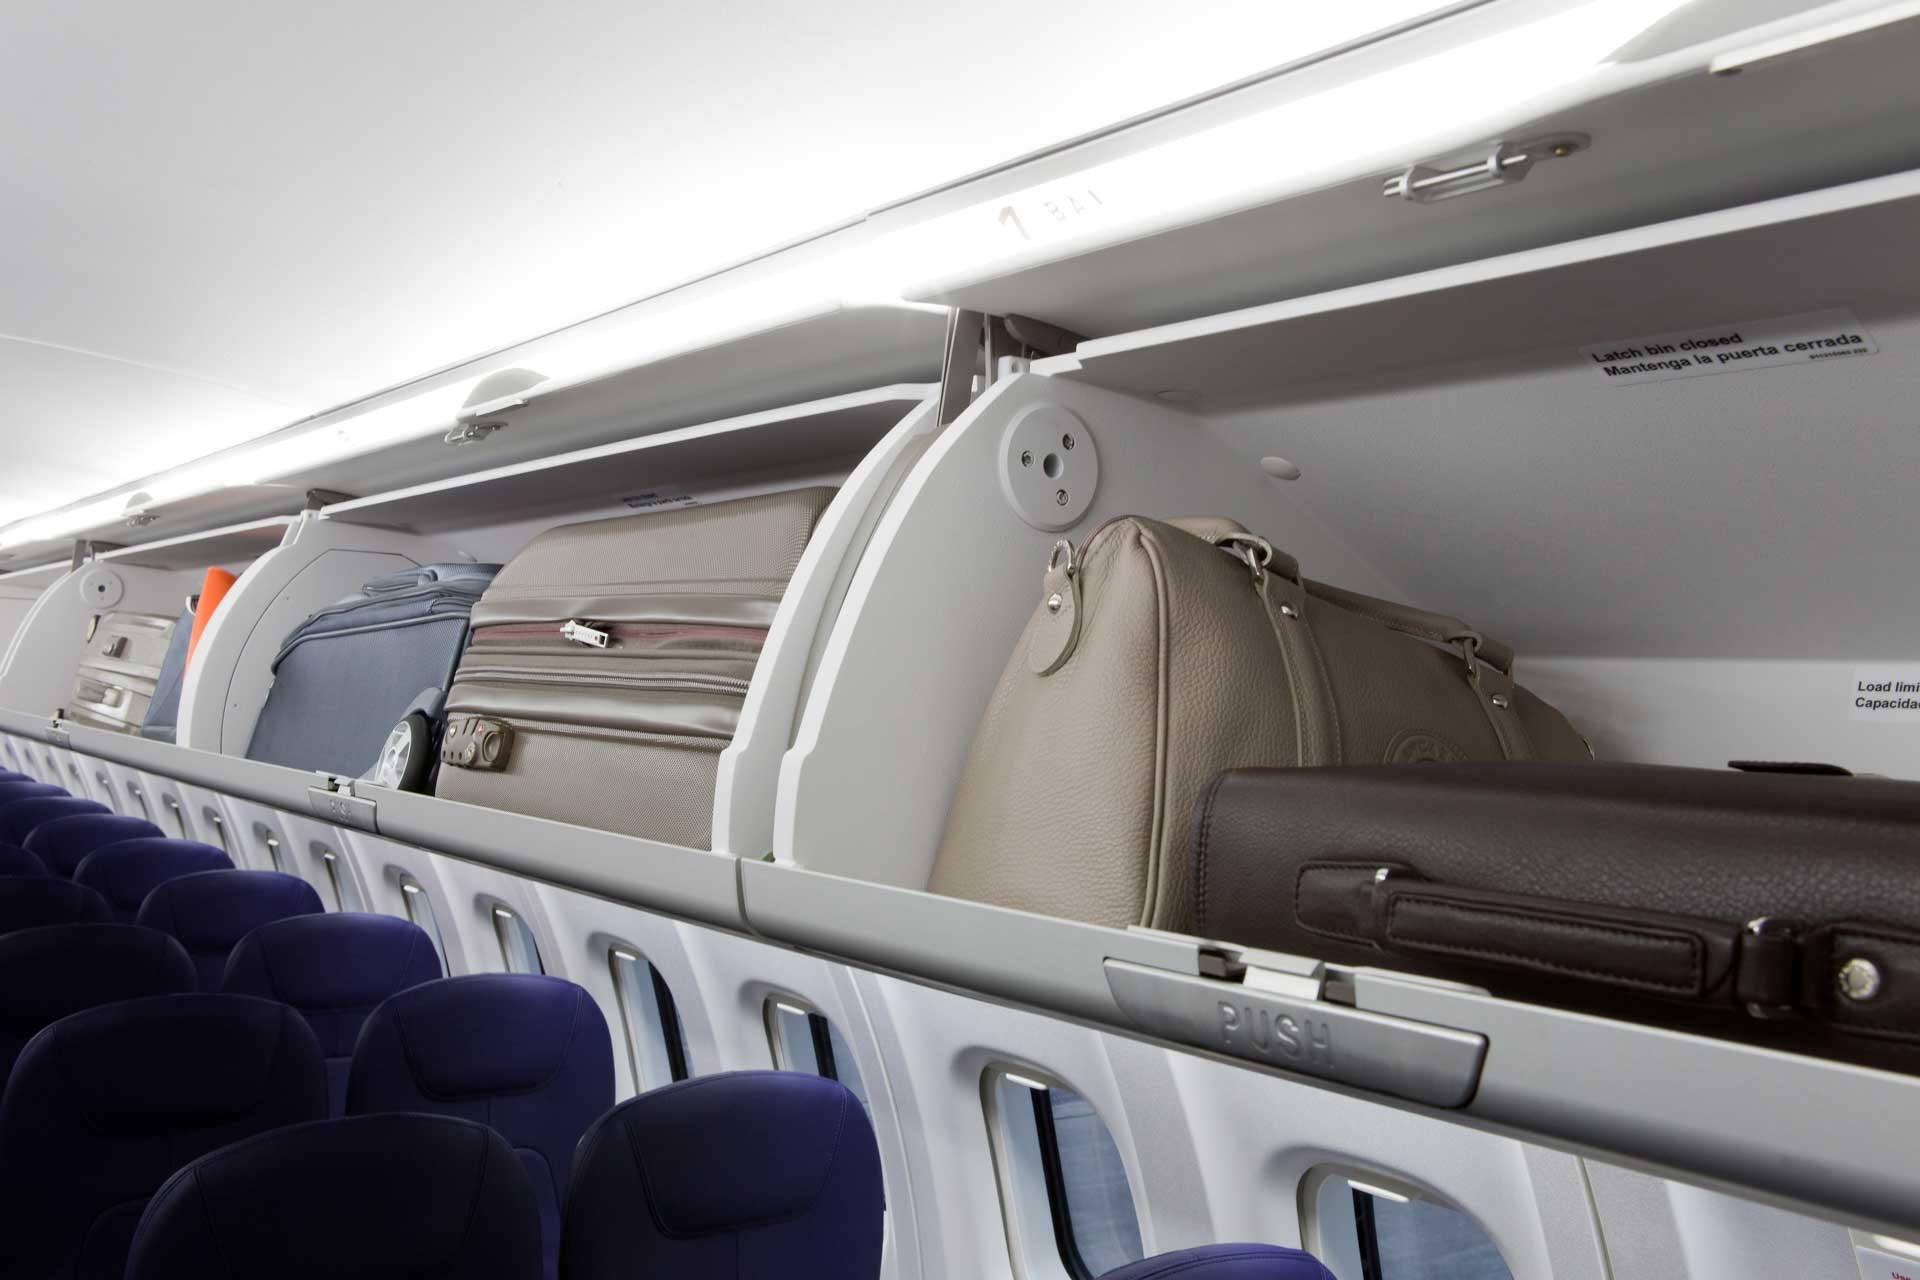 ATR 72-600 overhead bins with luggage (ARMONIA cabin) (Photo: ATR/Pierre Barthe)